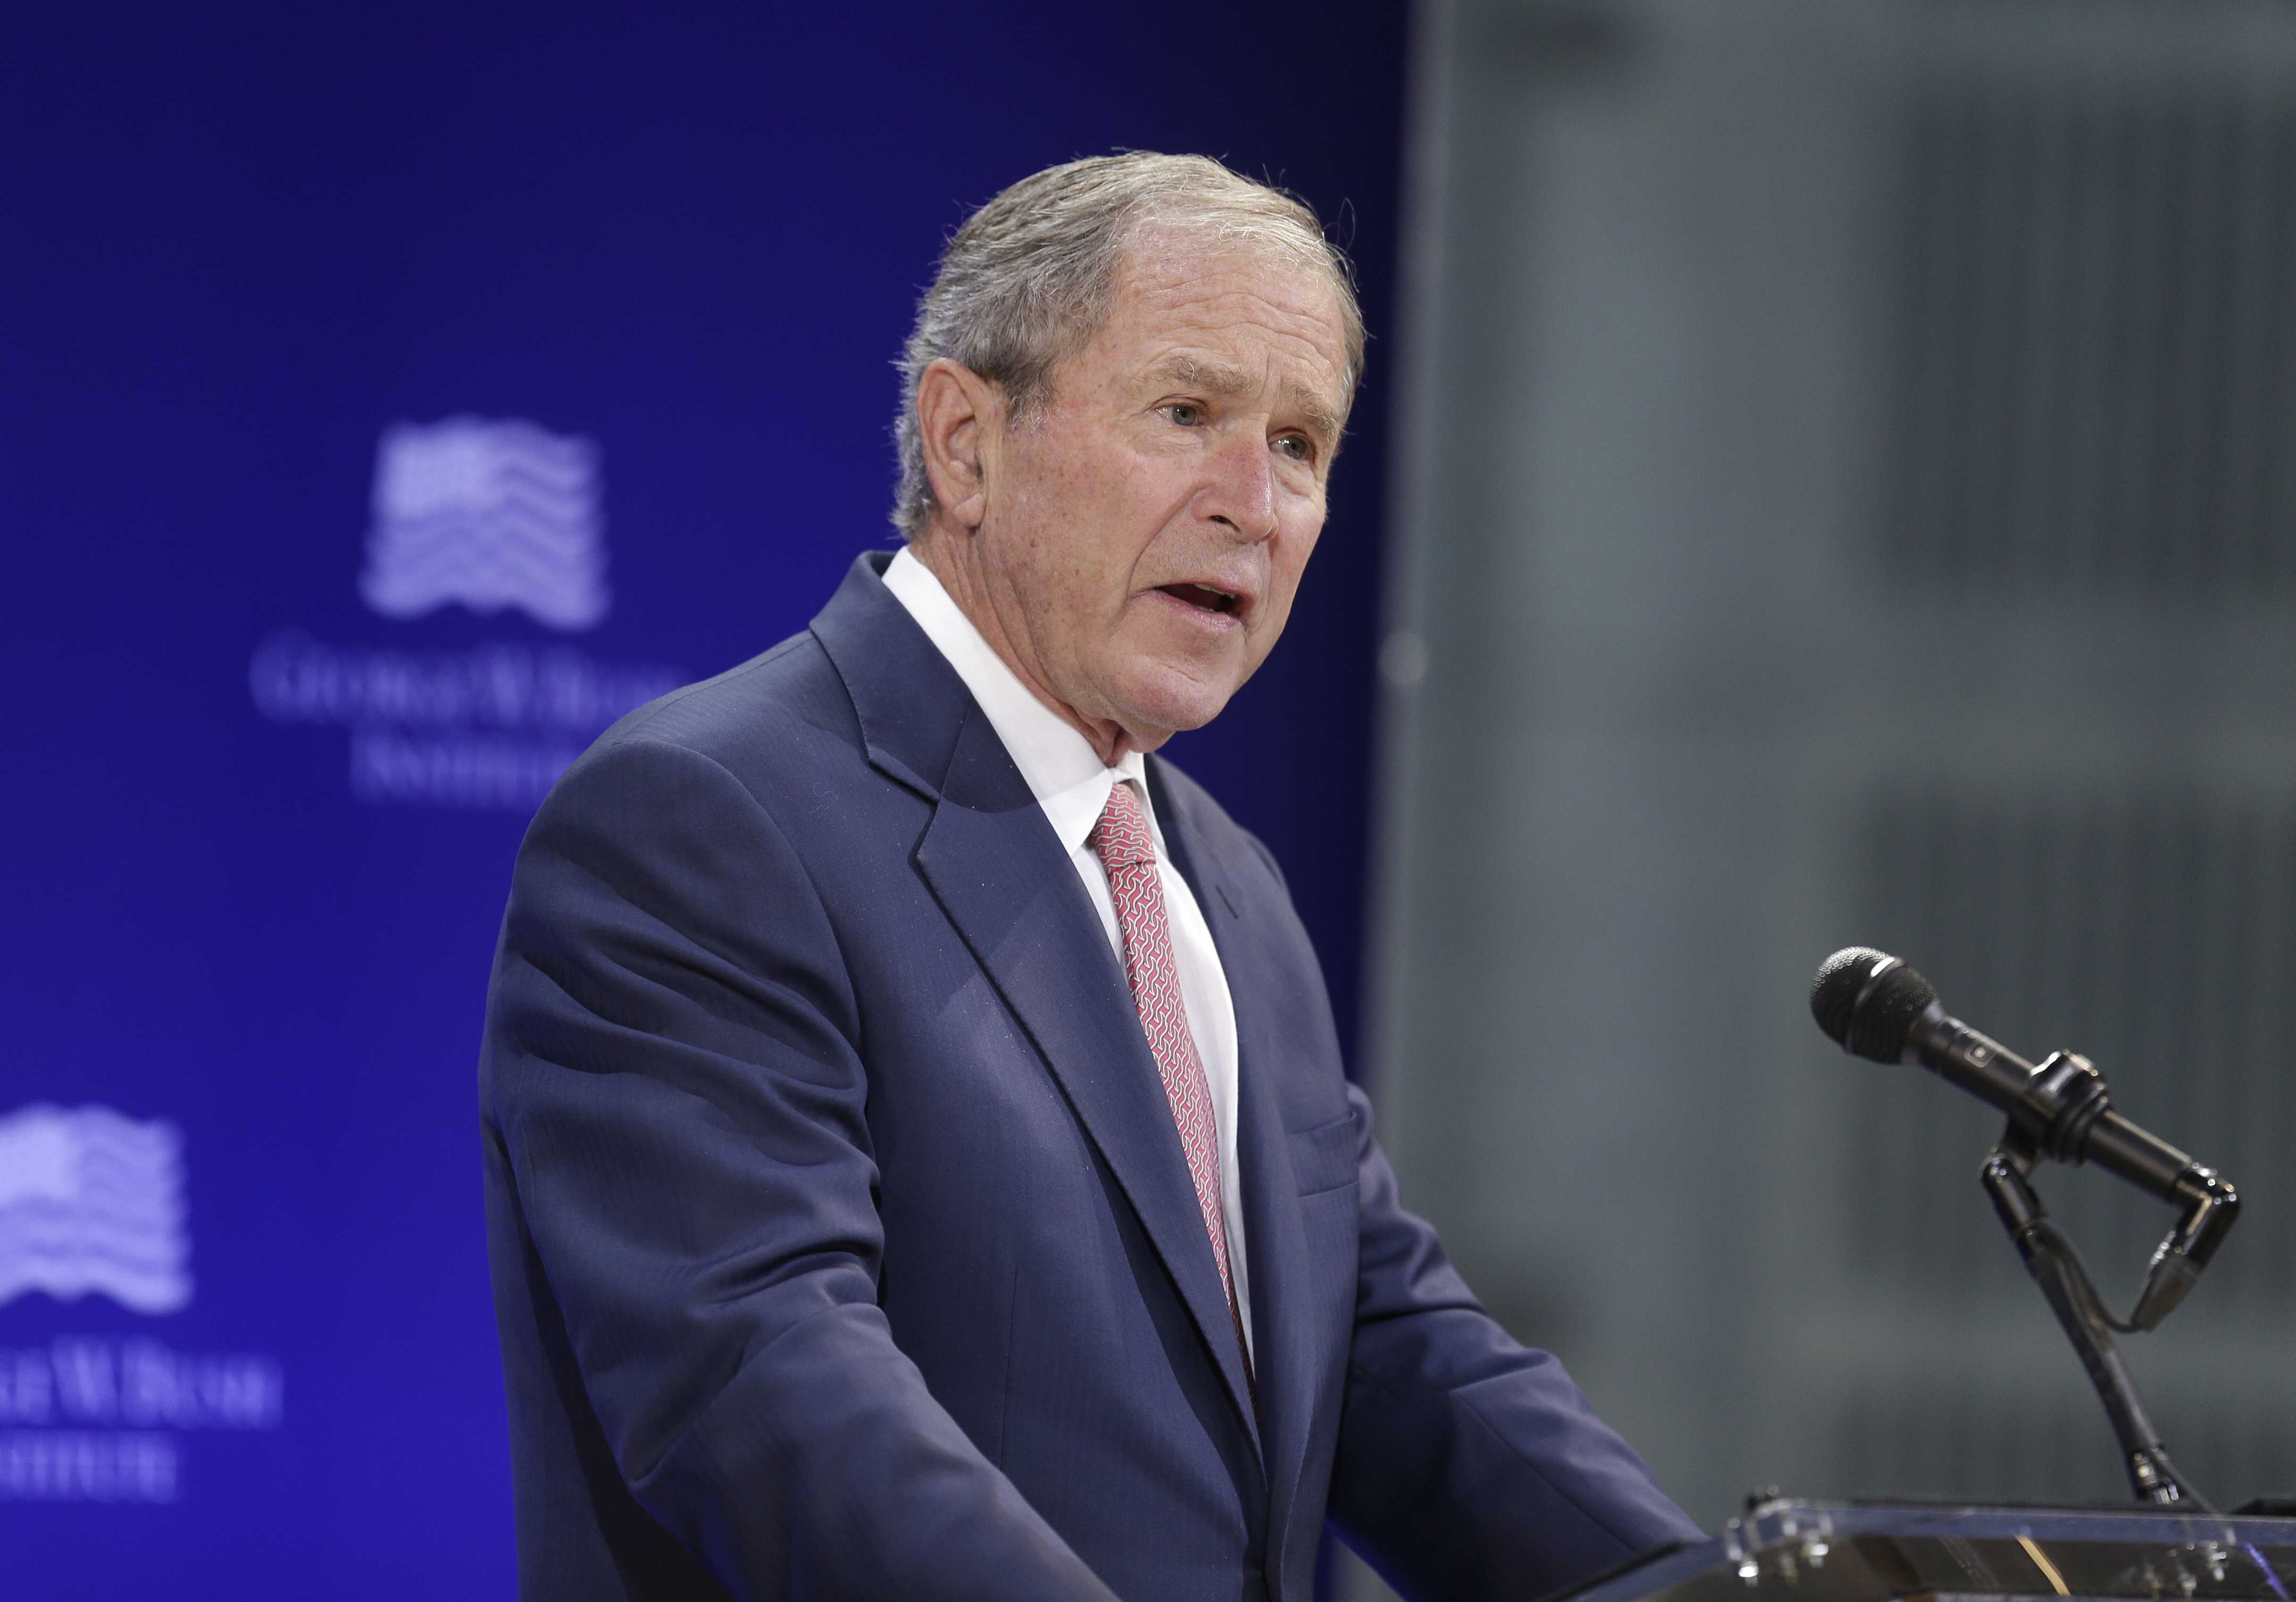 George W. Bush: 'Bigotry seems emboldened' in US